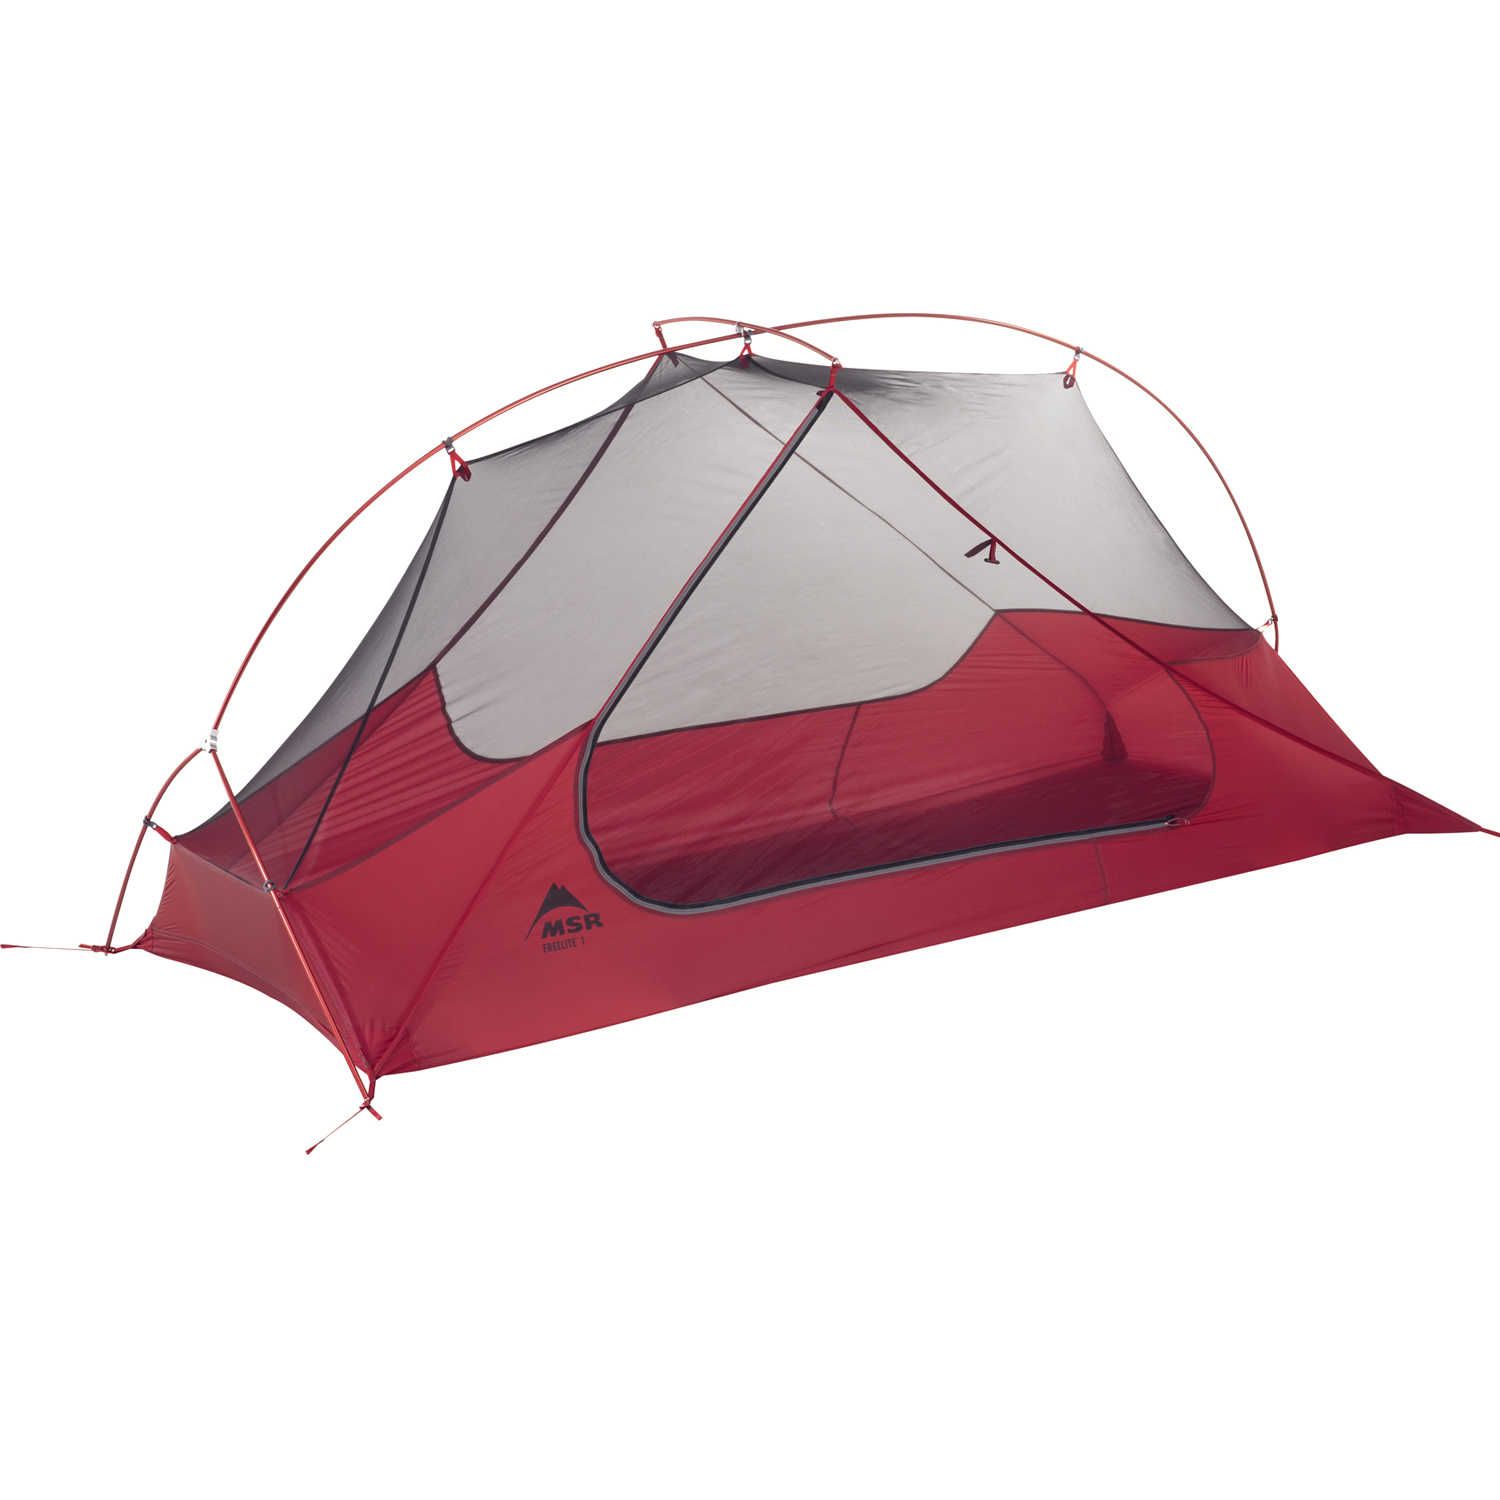 Tente FreeLite 1 - Double toit